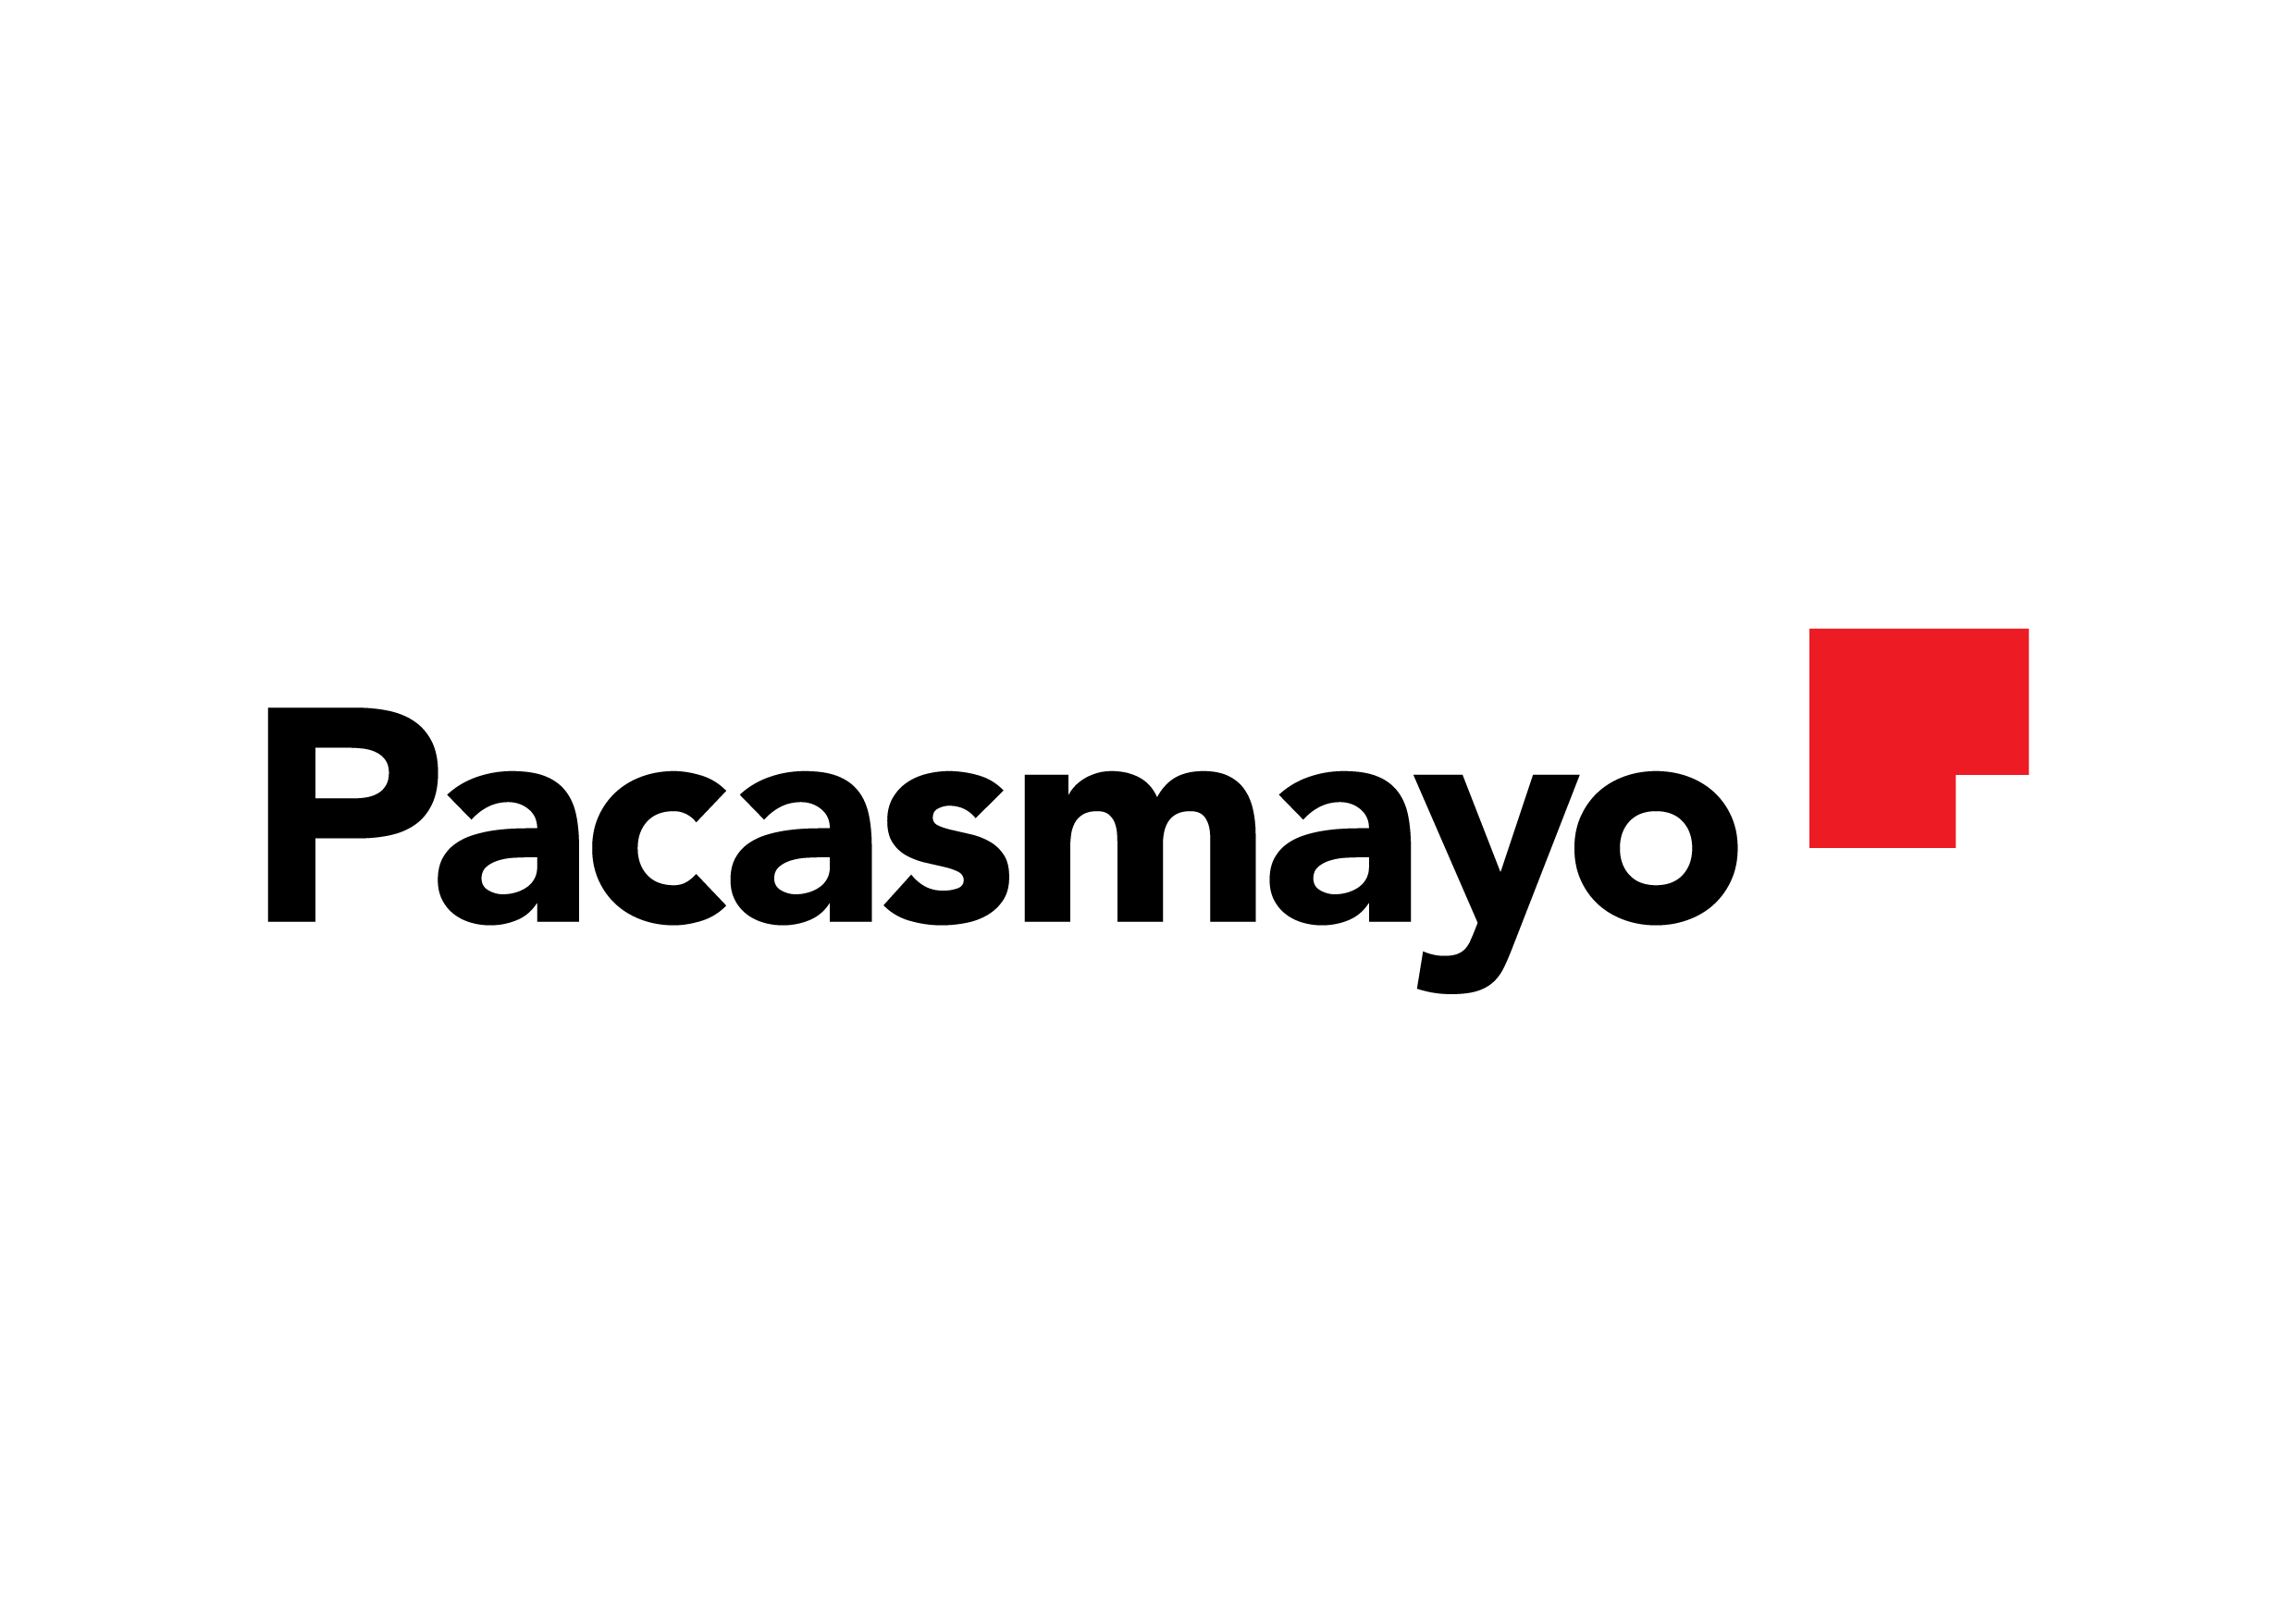 Cementos Pacasmayo社ロゴ